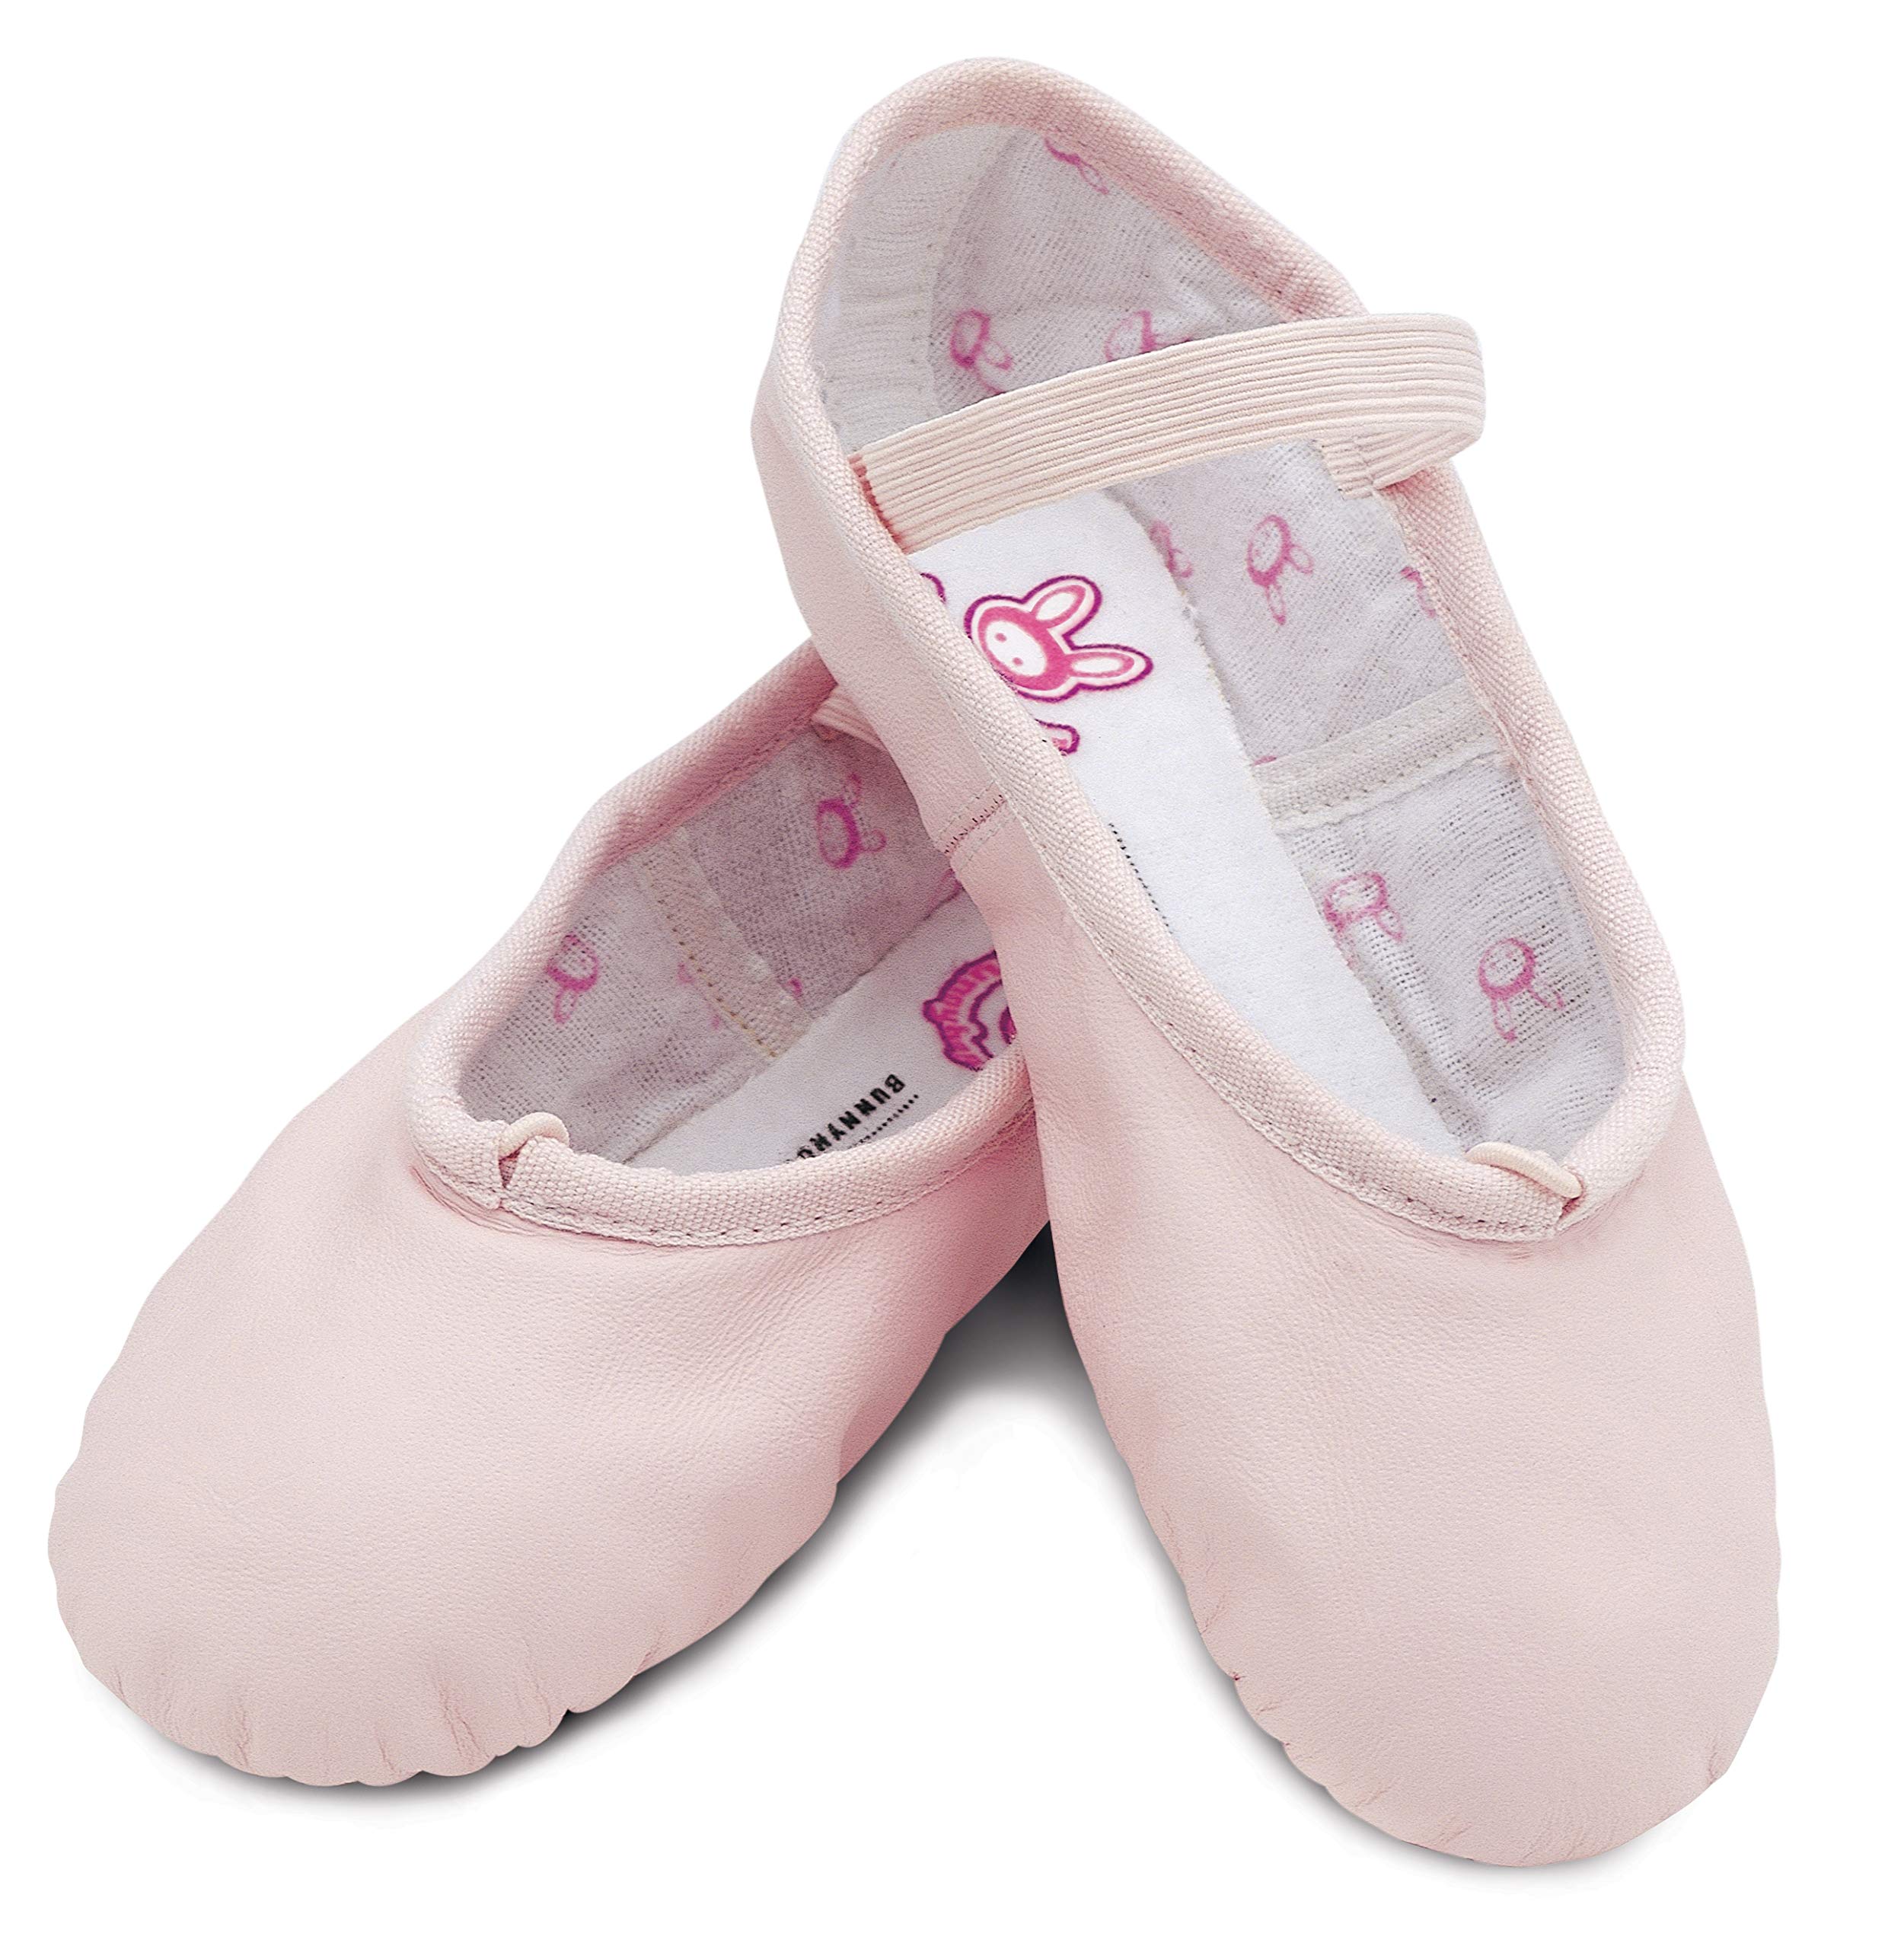 Bloch Dance Bunnyhop Ballet Slipper (Toddler/Little Kid) Little Kid (4-8 Years), Pink - 6.5 C US Toddler